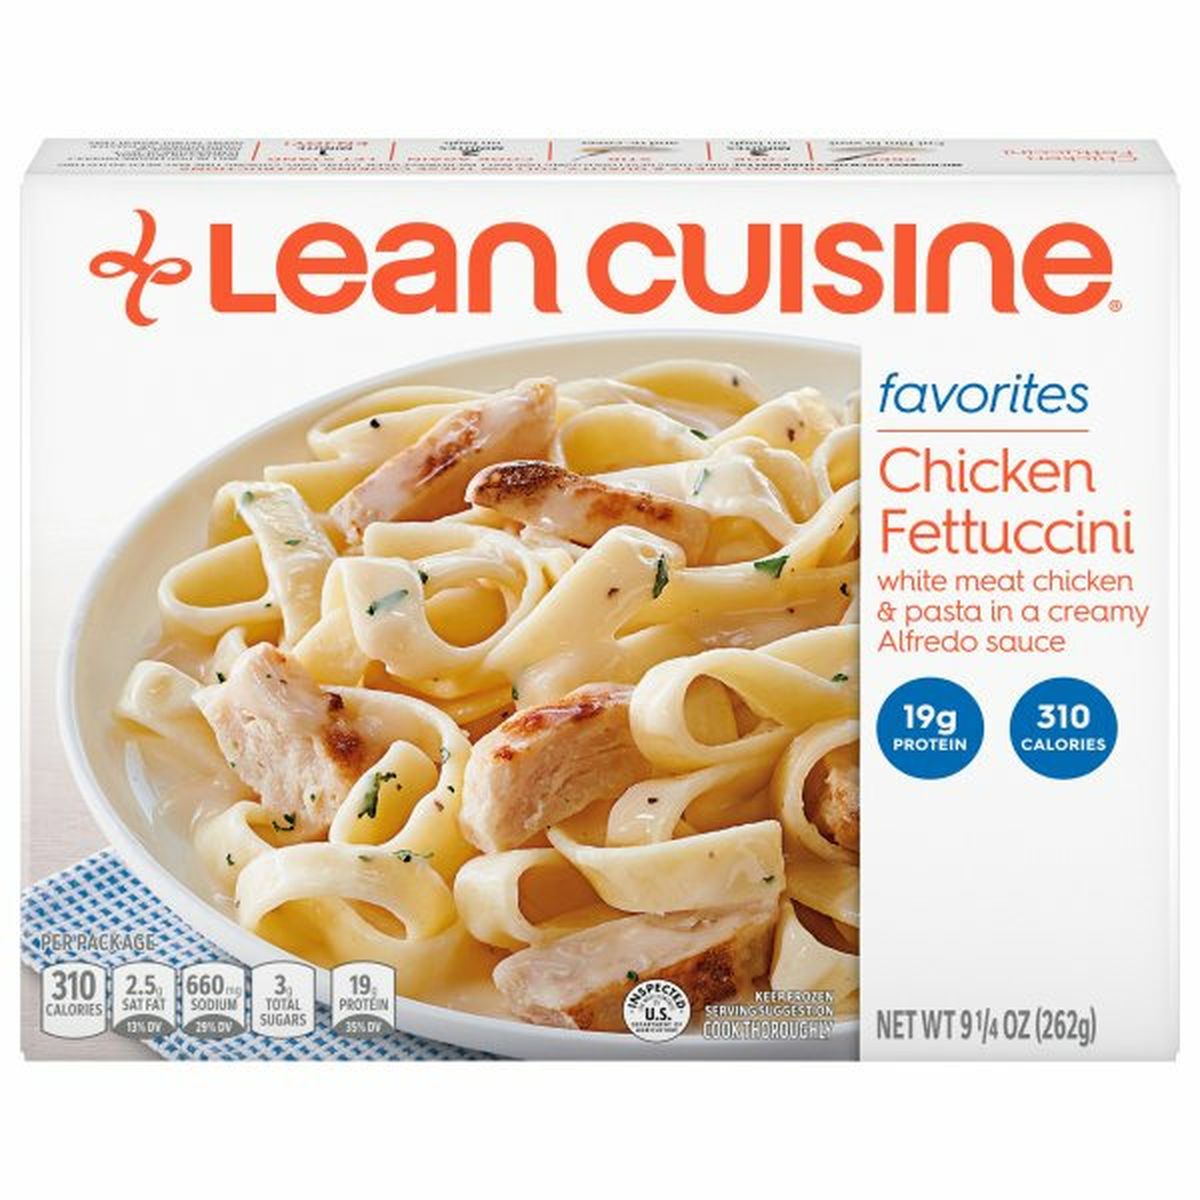 Calories in Lean Cuisine Favorites Chicken Fettuccini